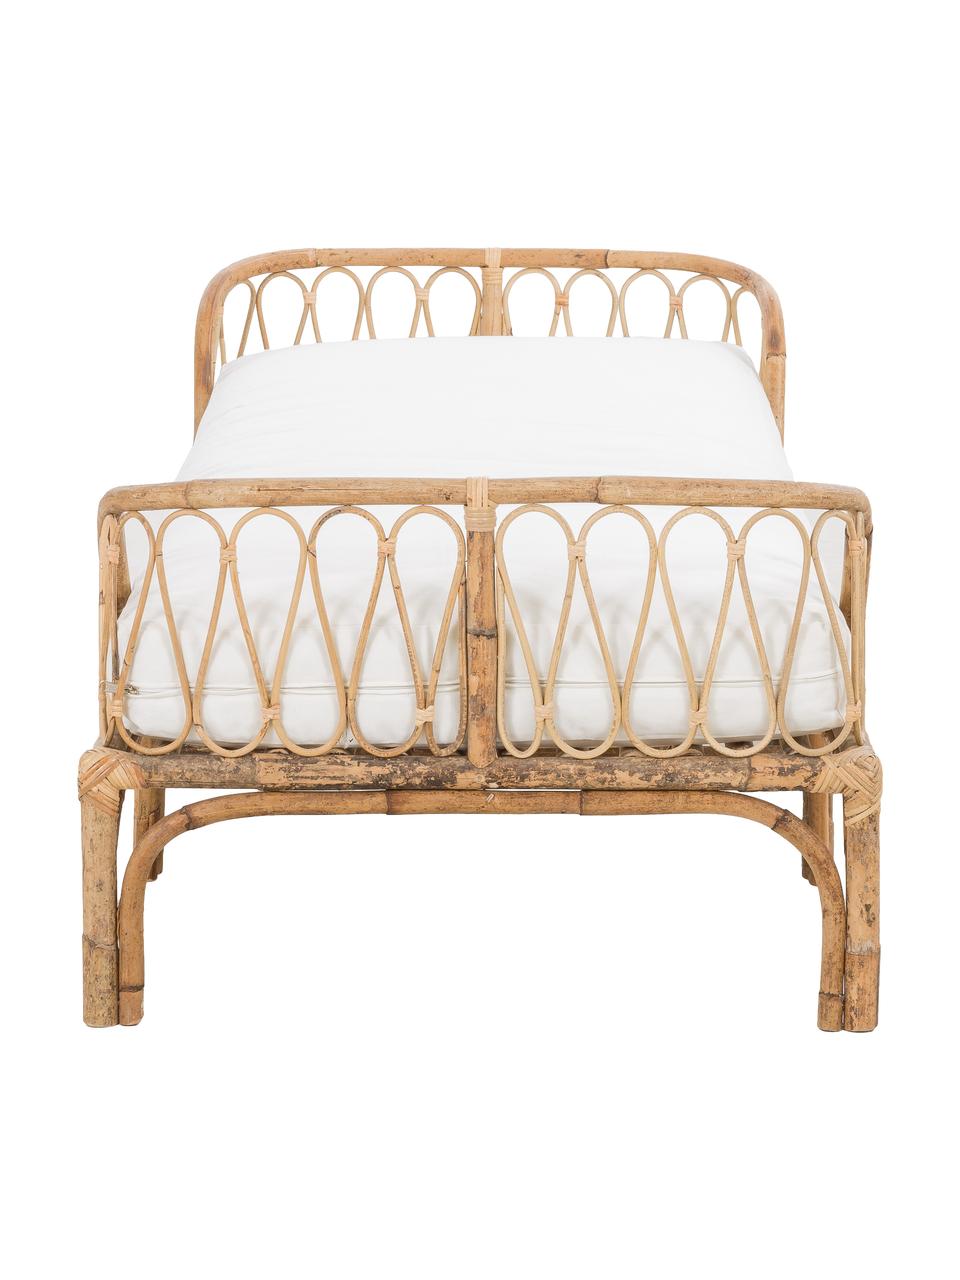 Chaise-longue in bambù con imbottitura Blond, Struttura: bambù, Rivestimento: cotone, Marrone chiaro, bianco, Larg. 185 x Prof. 78 cm